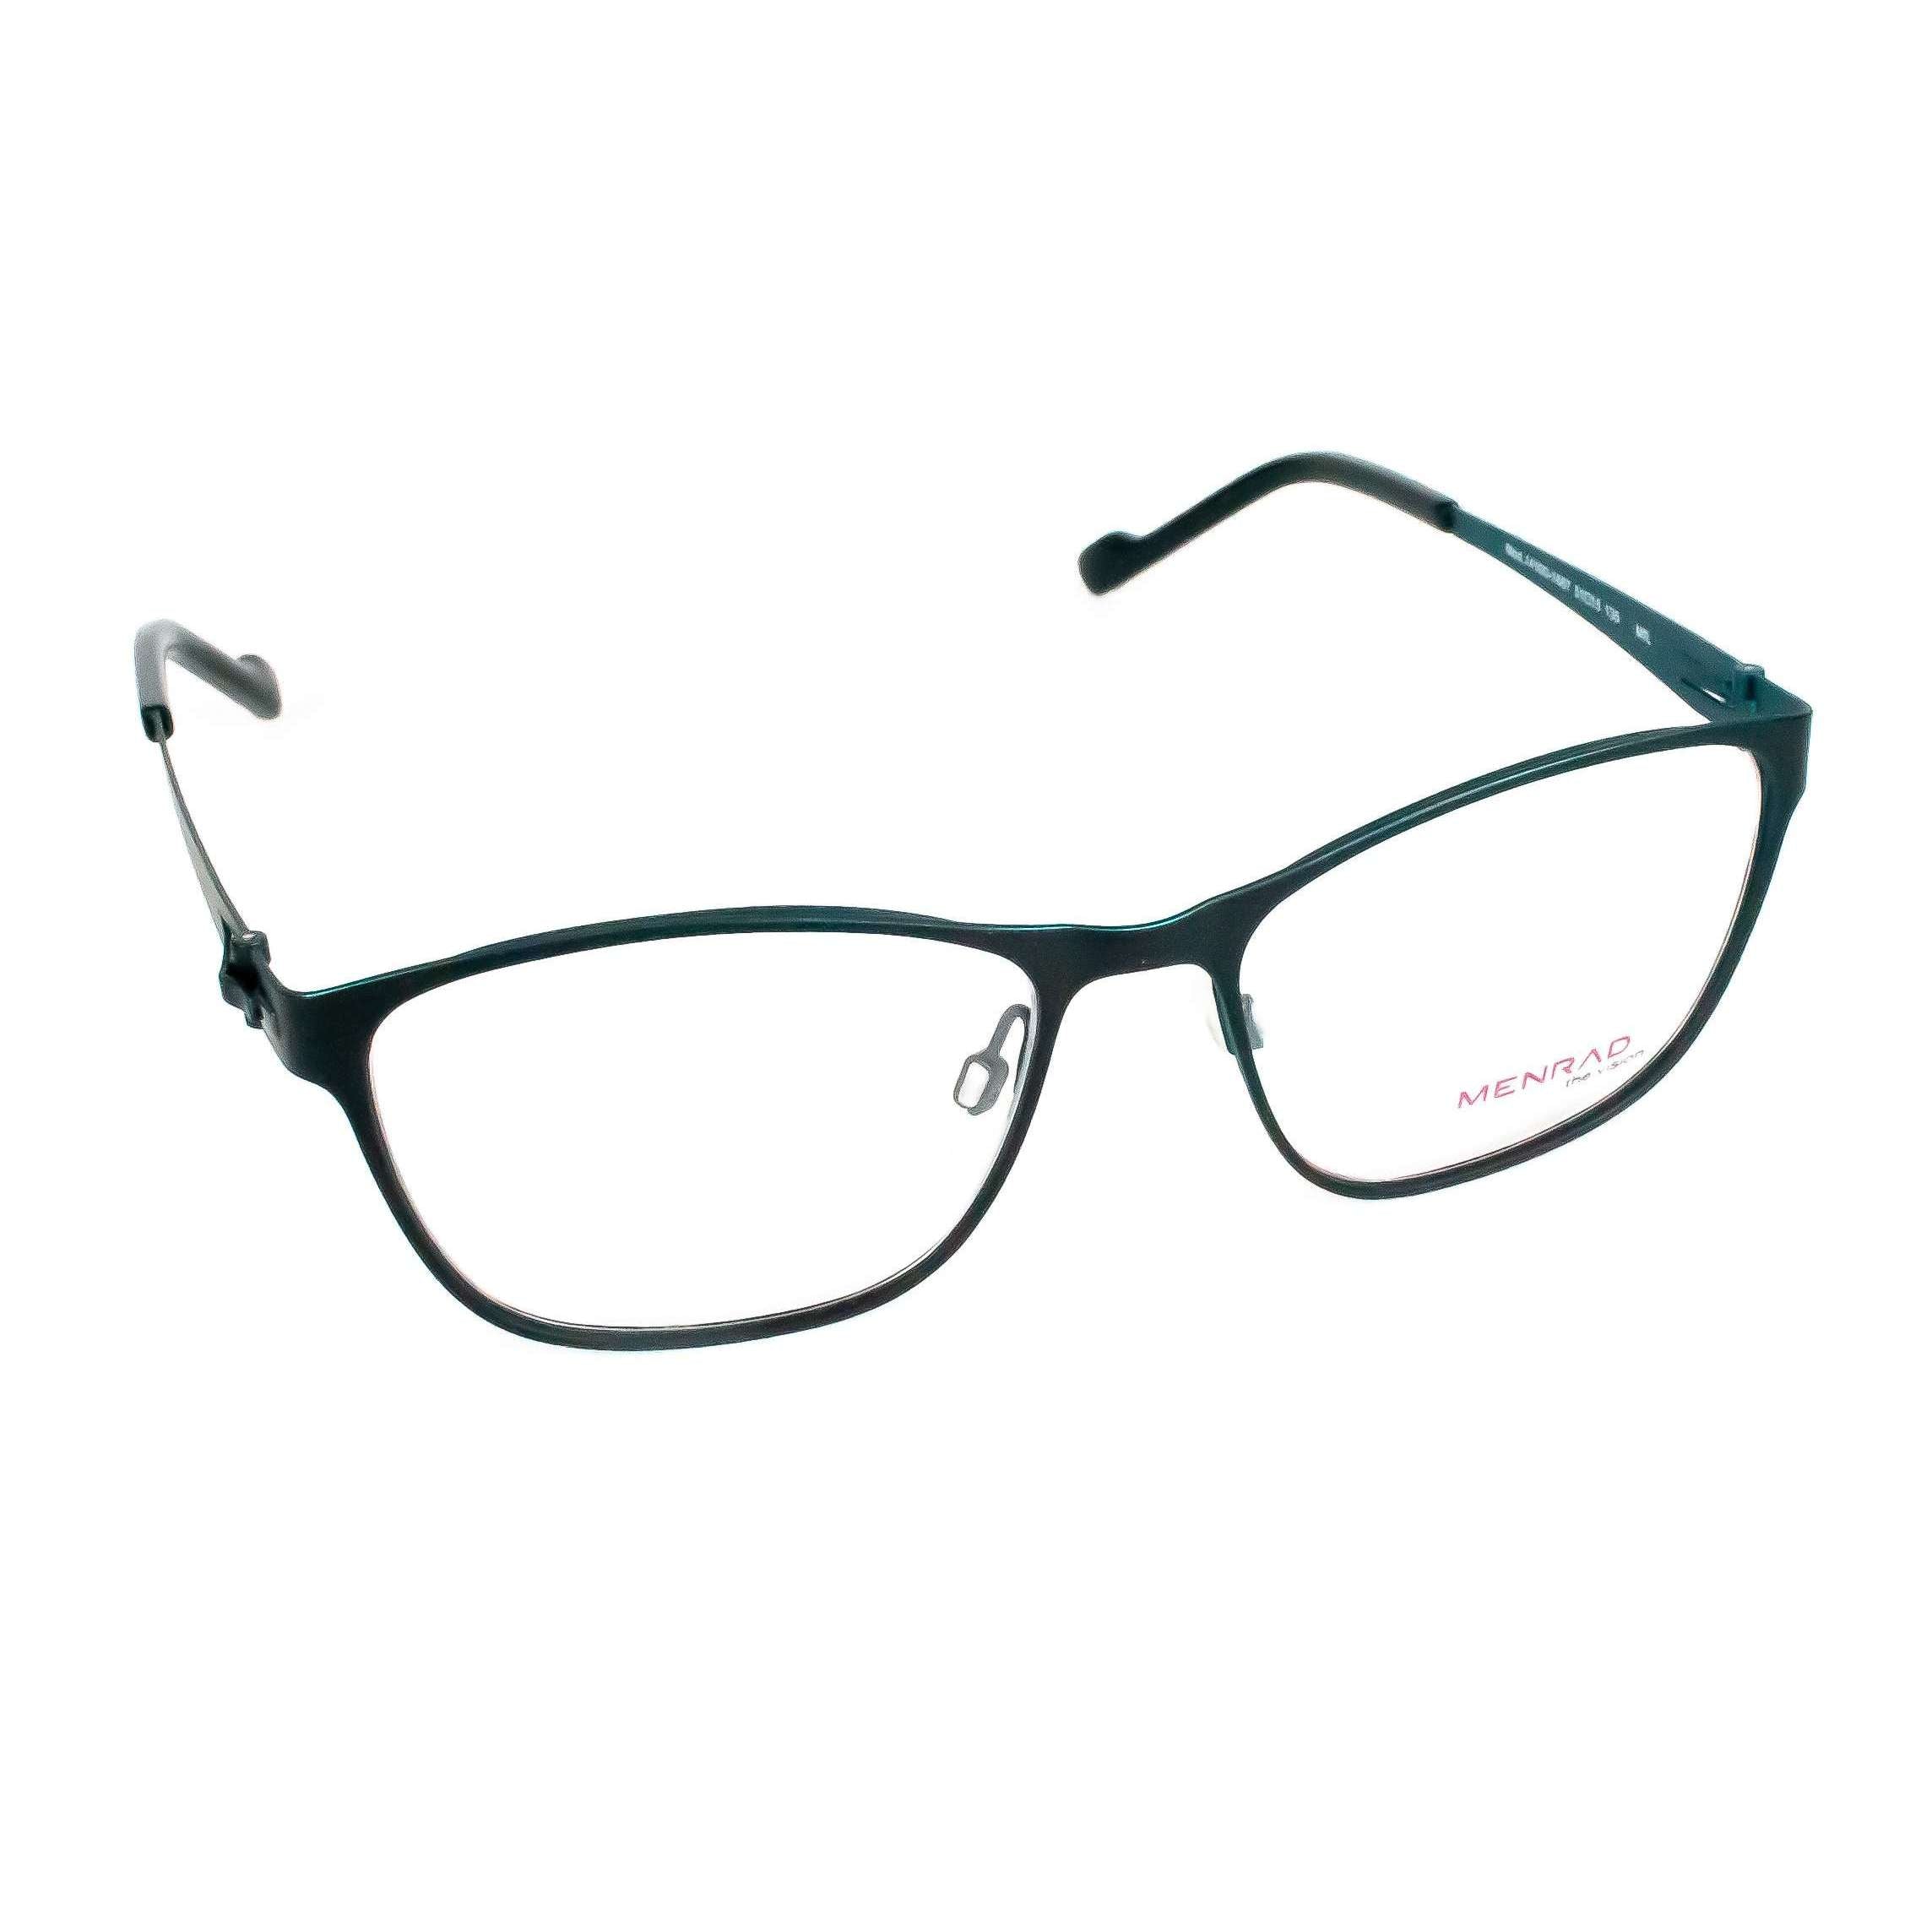 Menrad Model 14100 Grey Glasses